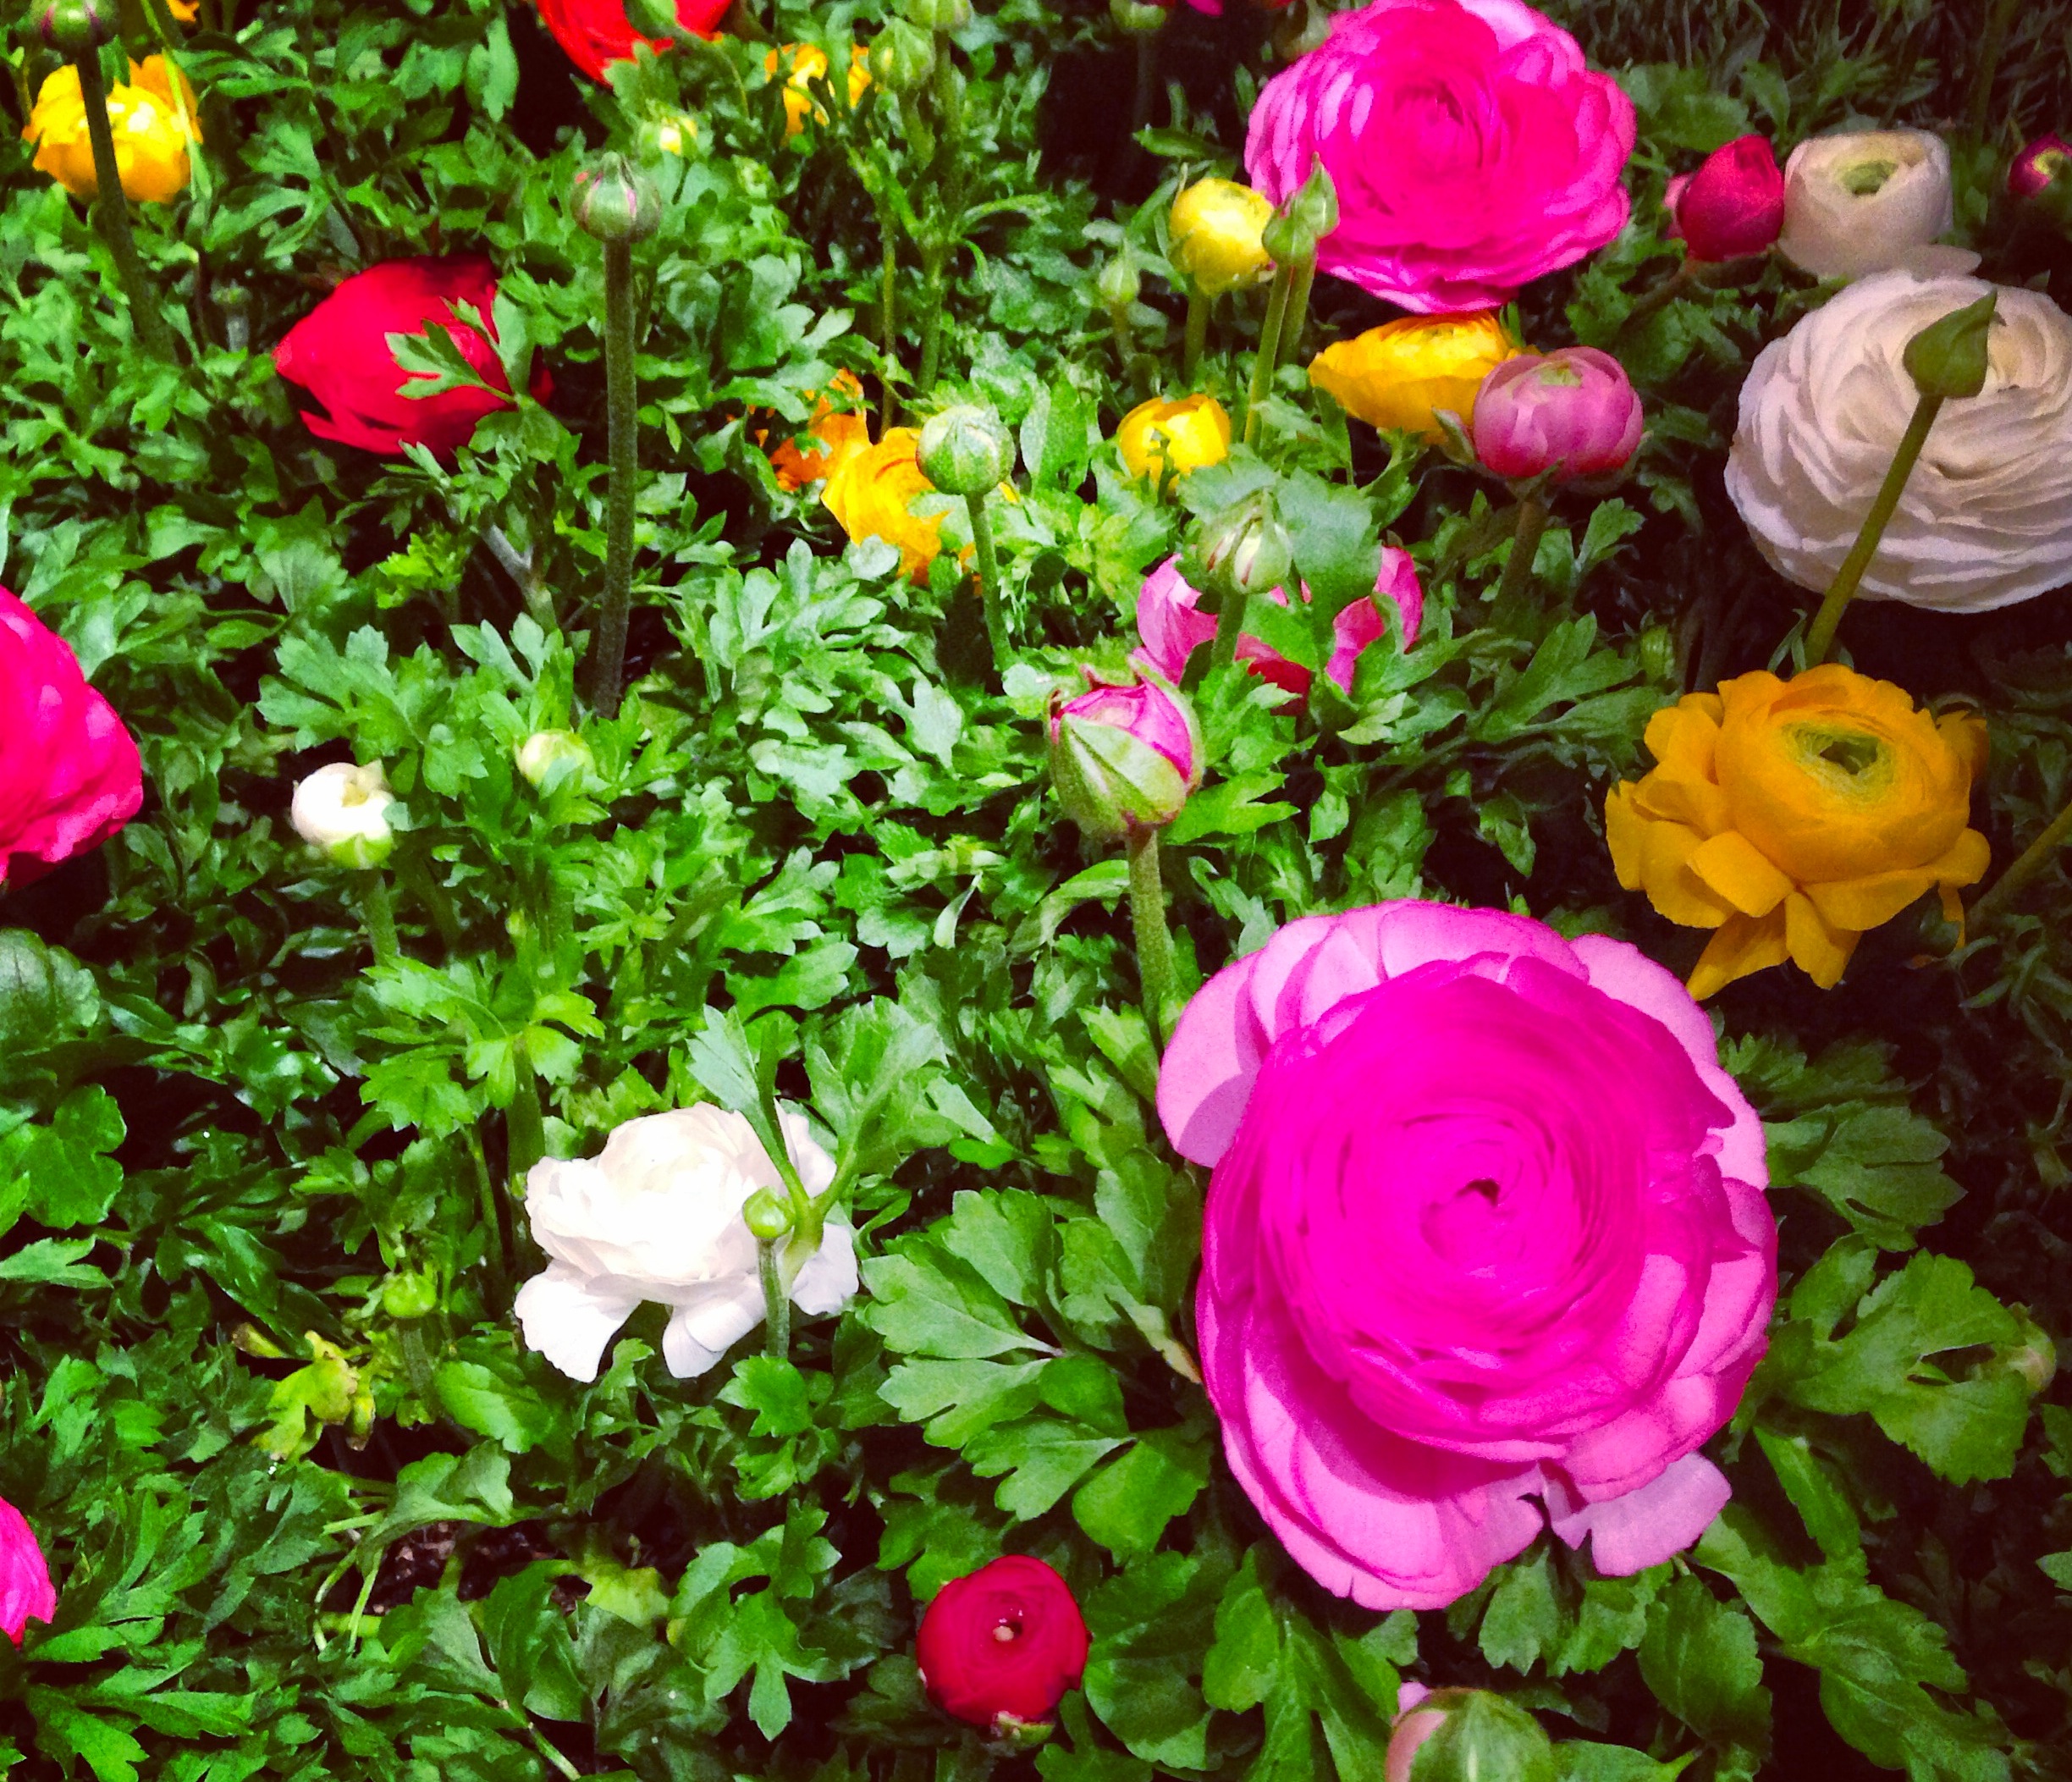 macy's - secret garden show - flowers - 2014